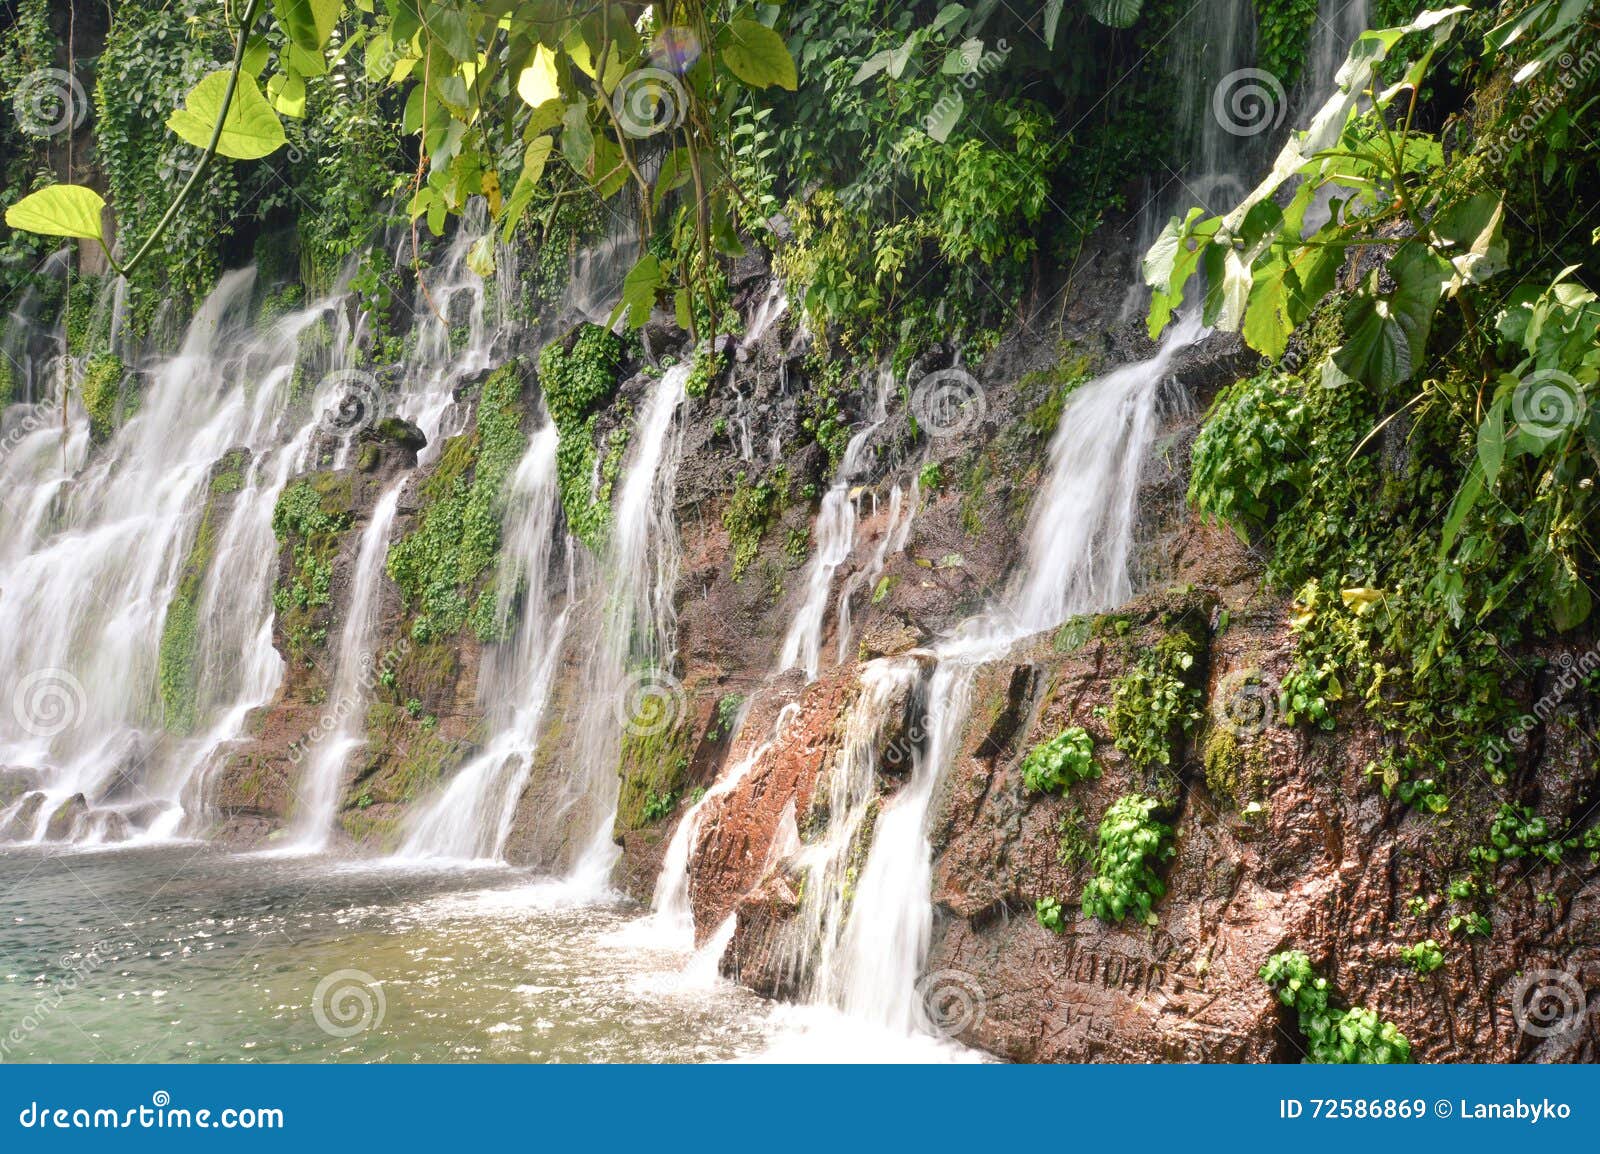 chorros de la calera waterfalls in juayua, ruta de las flores it